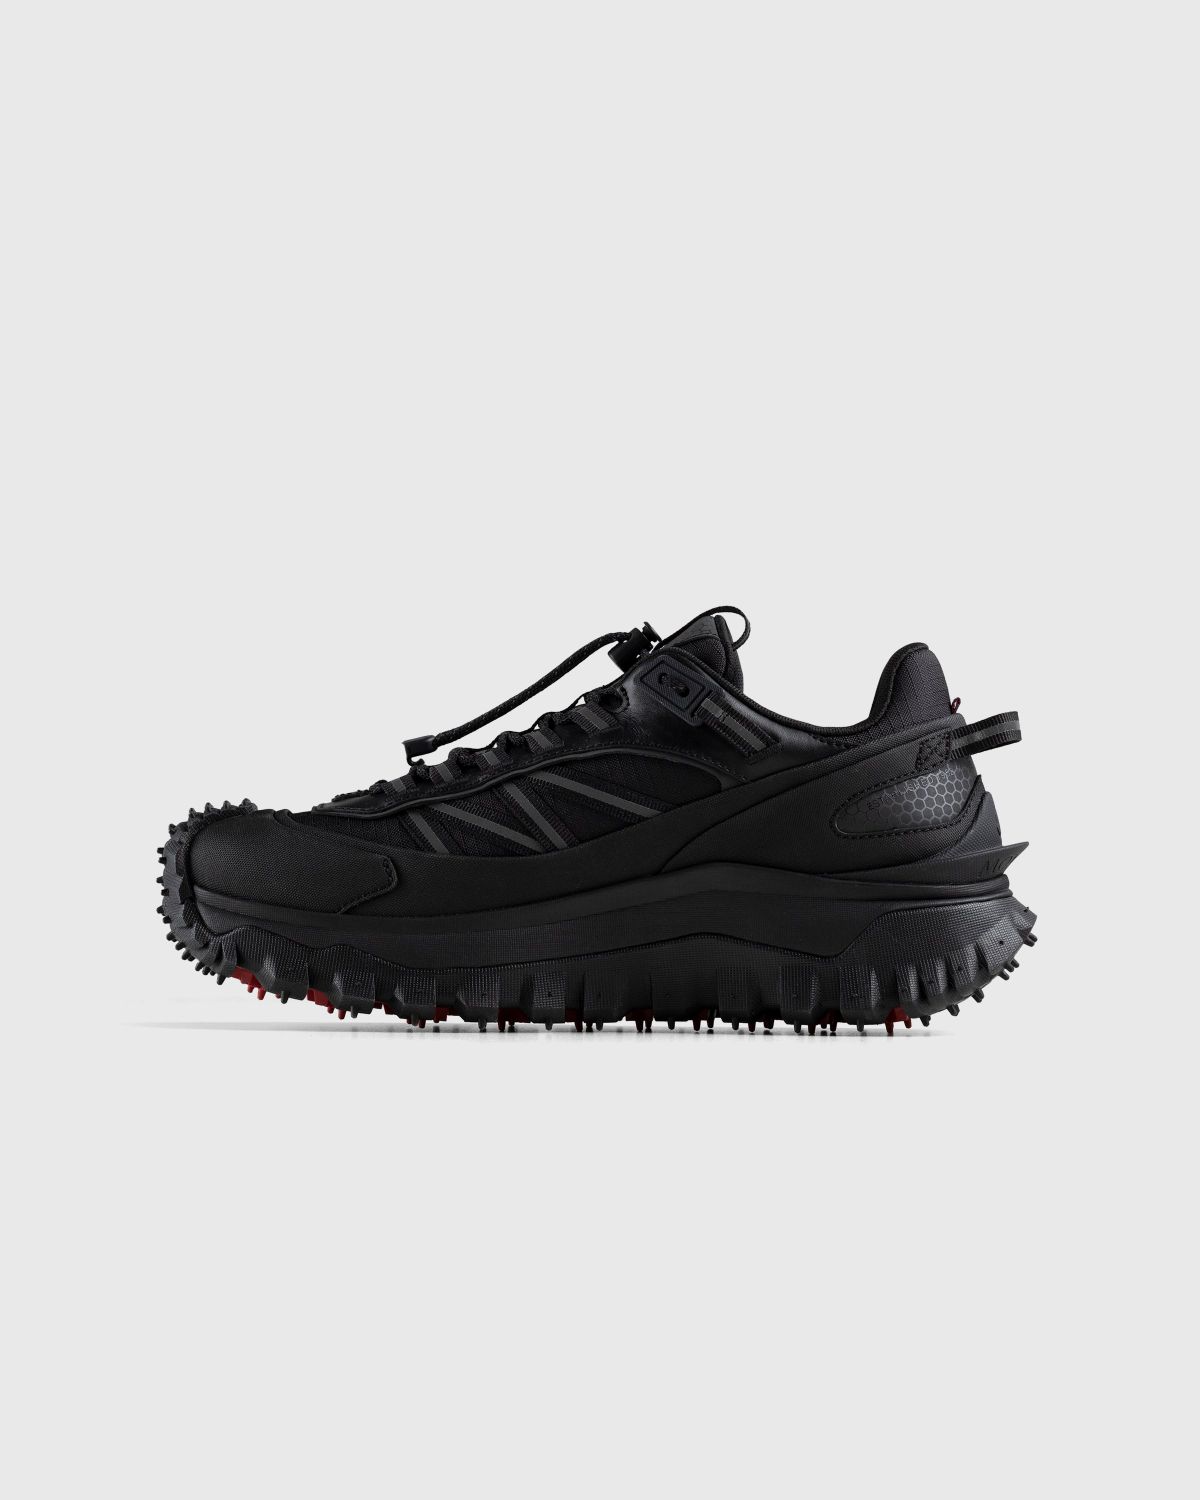 Moncler – Trailgrip GTX Sneakers Black - Low Top Sneakers - Black - Image 2